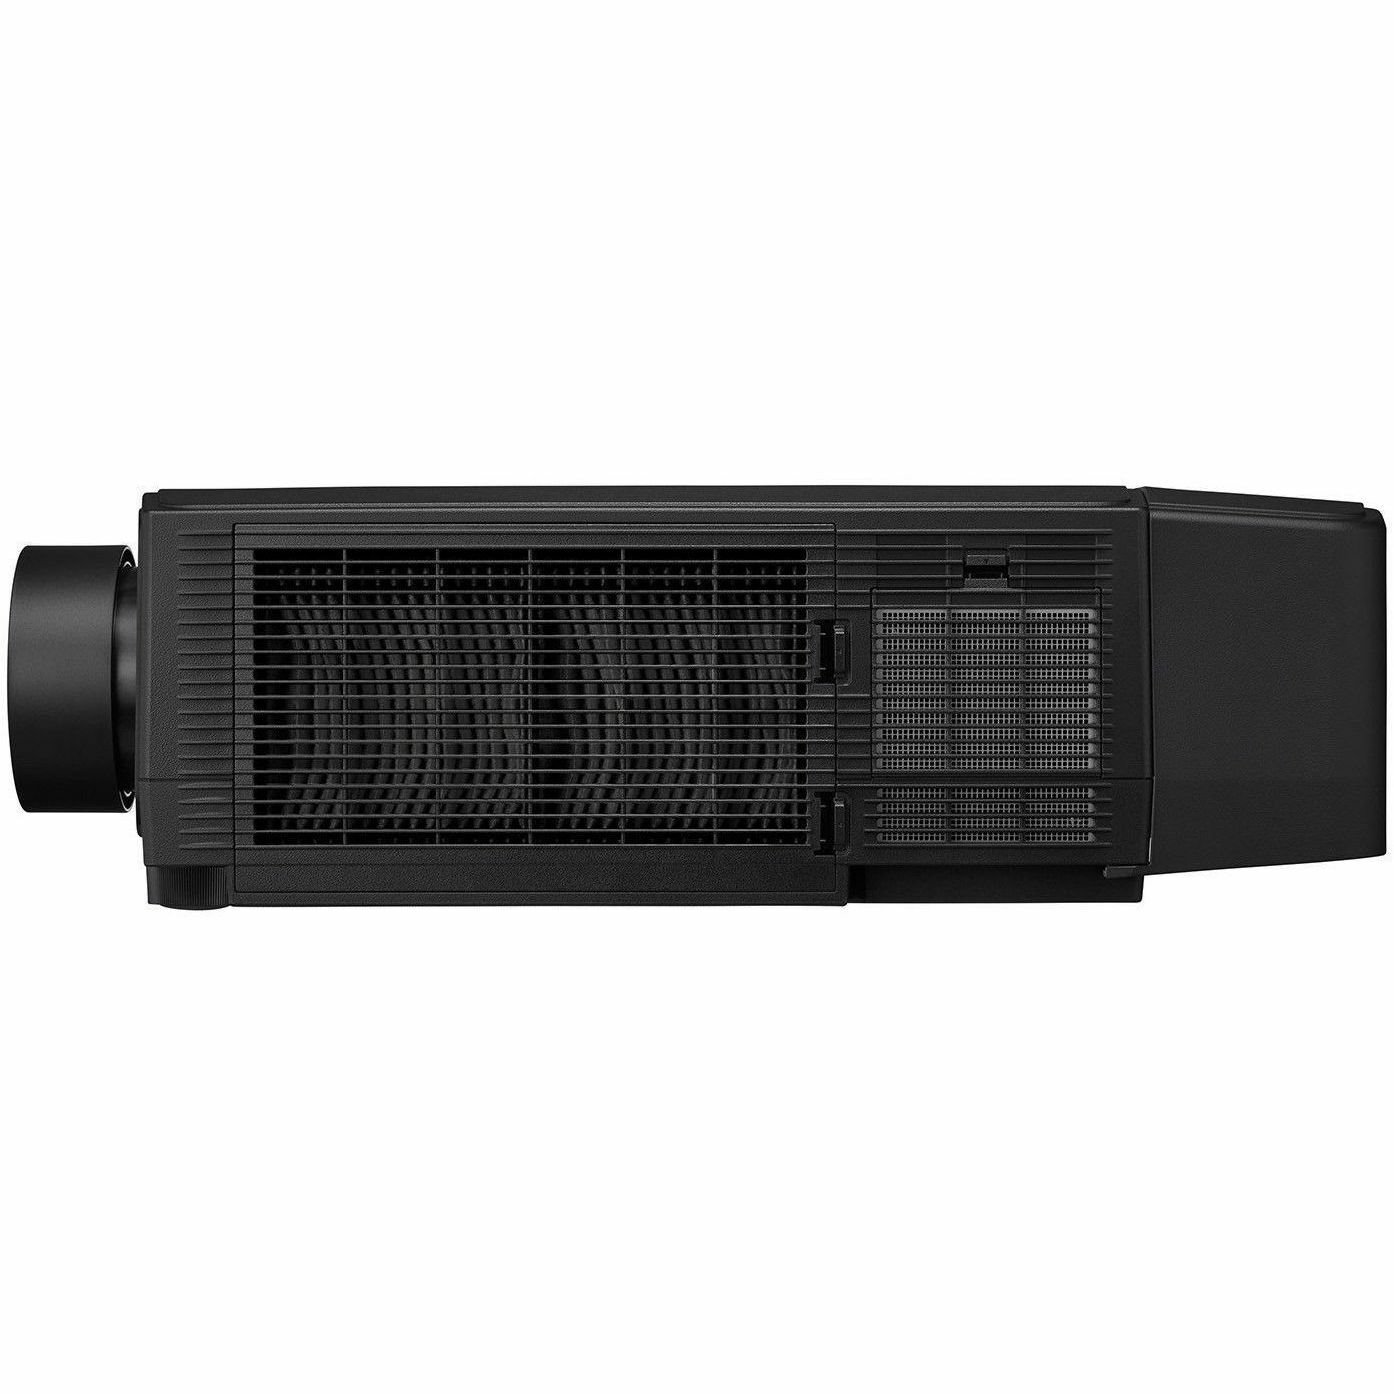 NEC Display PV710UL 3LCD Projector - 16:10 - Black